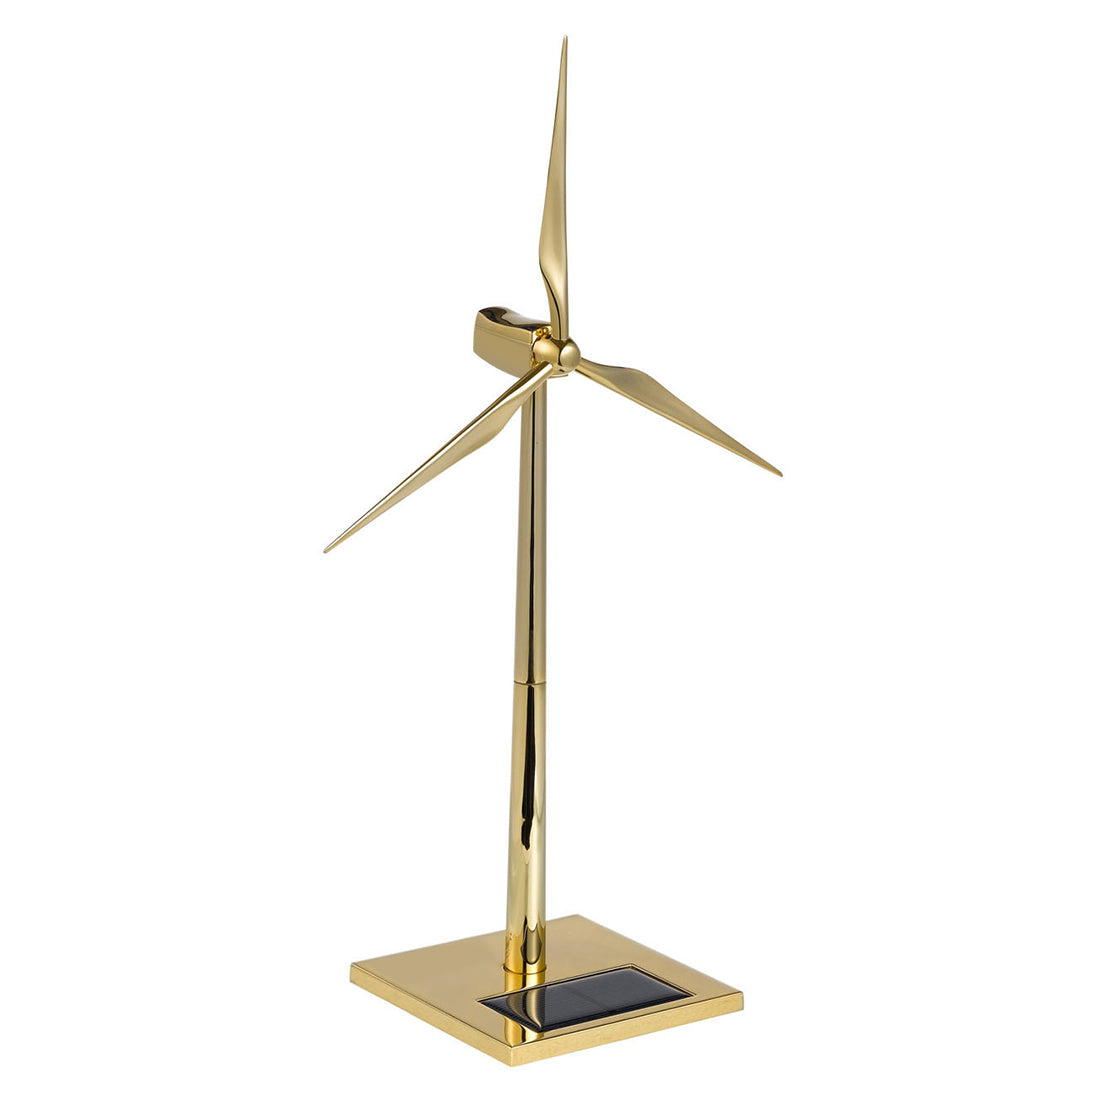 Solar Powered Wind Turbine Desk Model